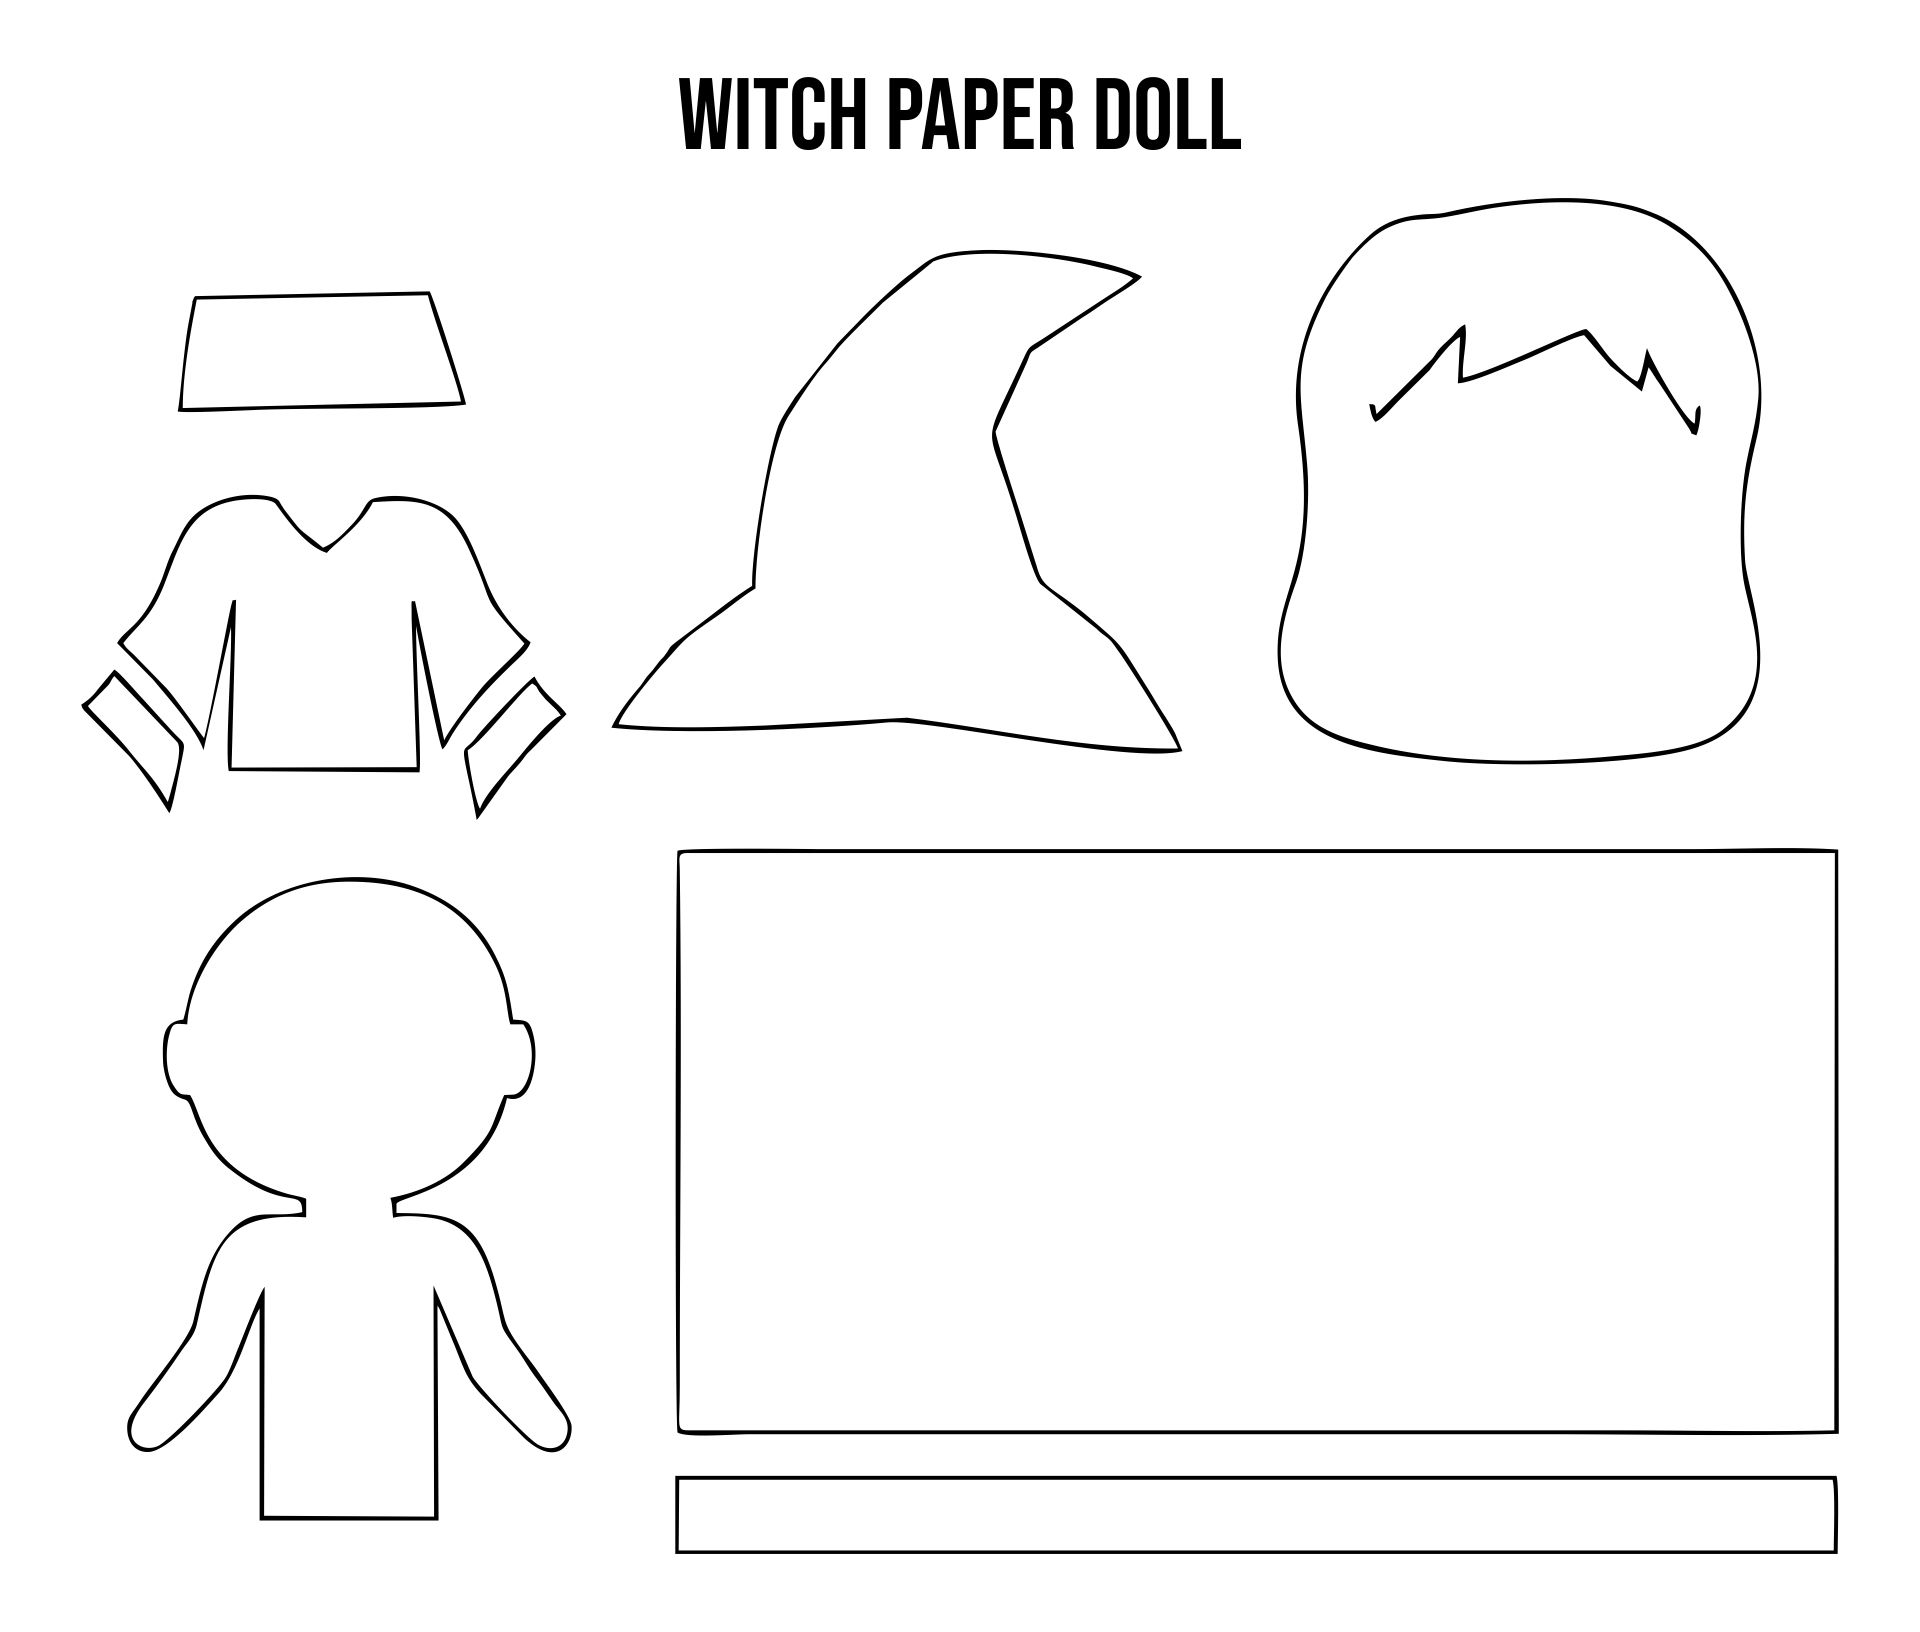 Halloween Paper Doll